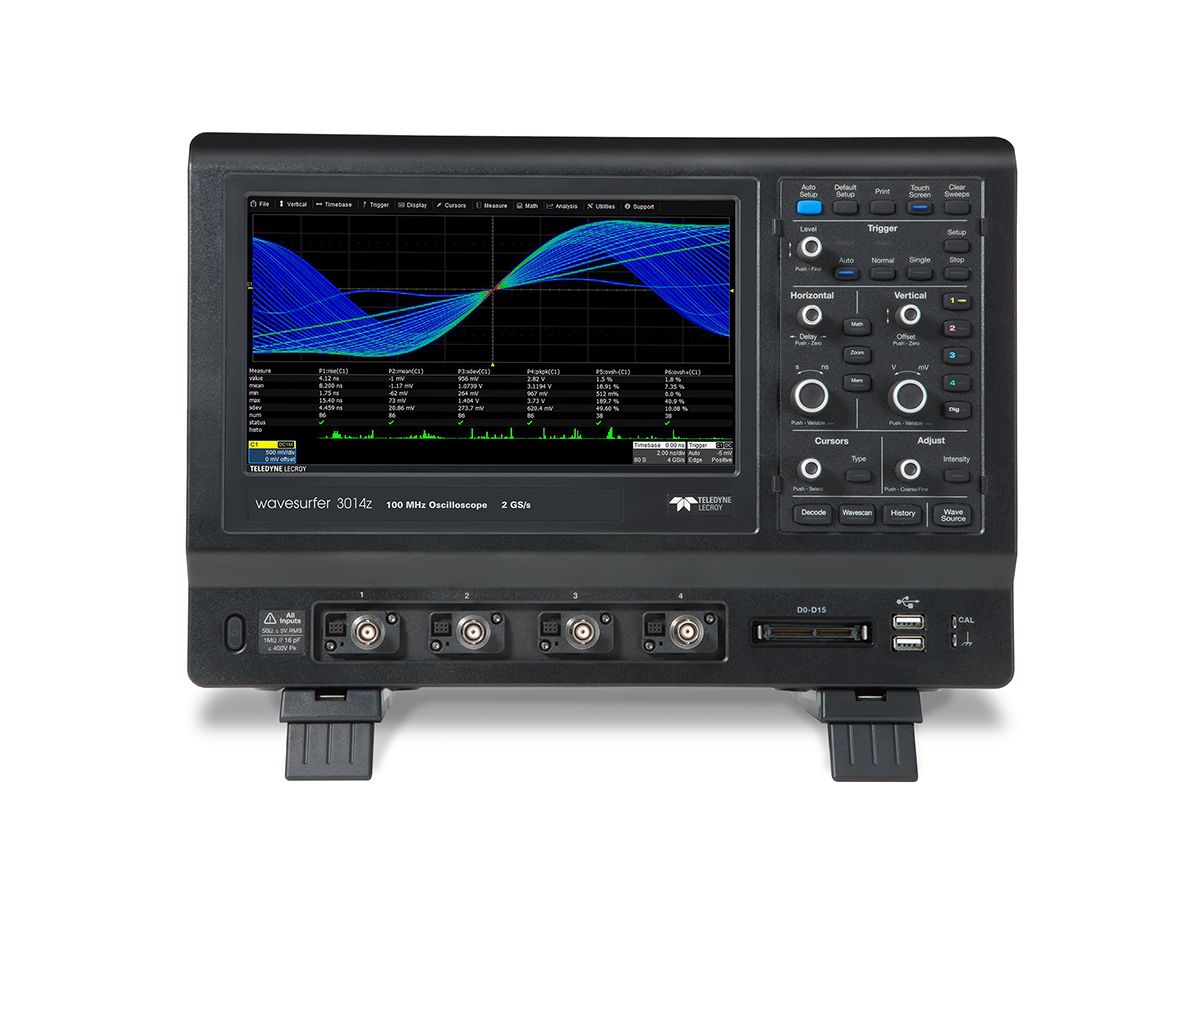 Oscilloscopio Da banco Teledyne LeCroy WaveSurfer 3104z COMPLETAMENTE CARICATO, 4 ch. analogici, 1GHz